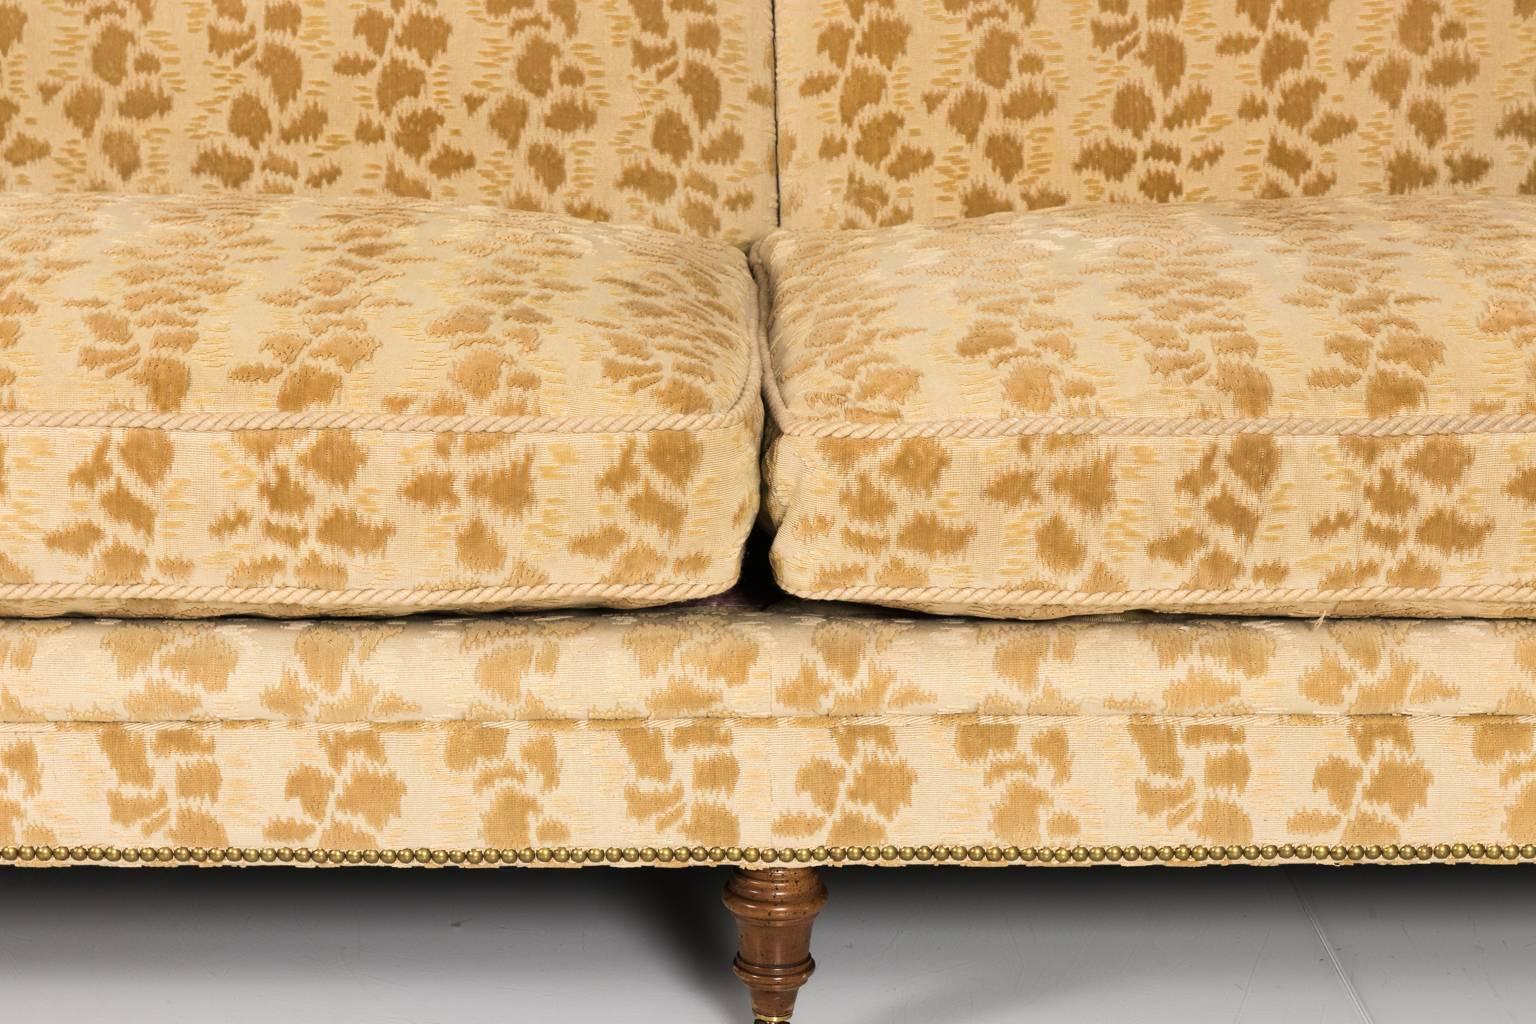 Custom O'Henry House wing back sofa with travers cut velvet fabric, circa late 20th century.
 